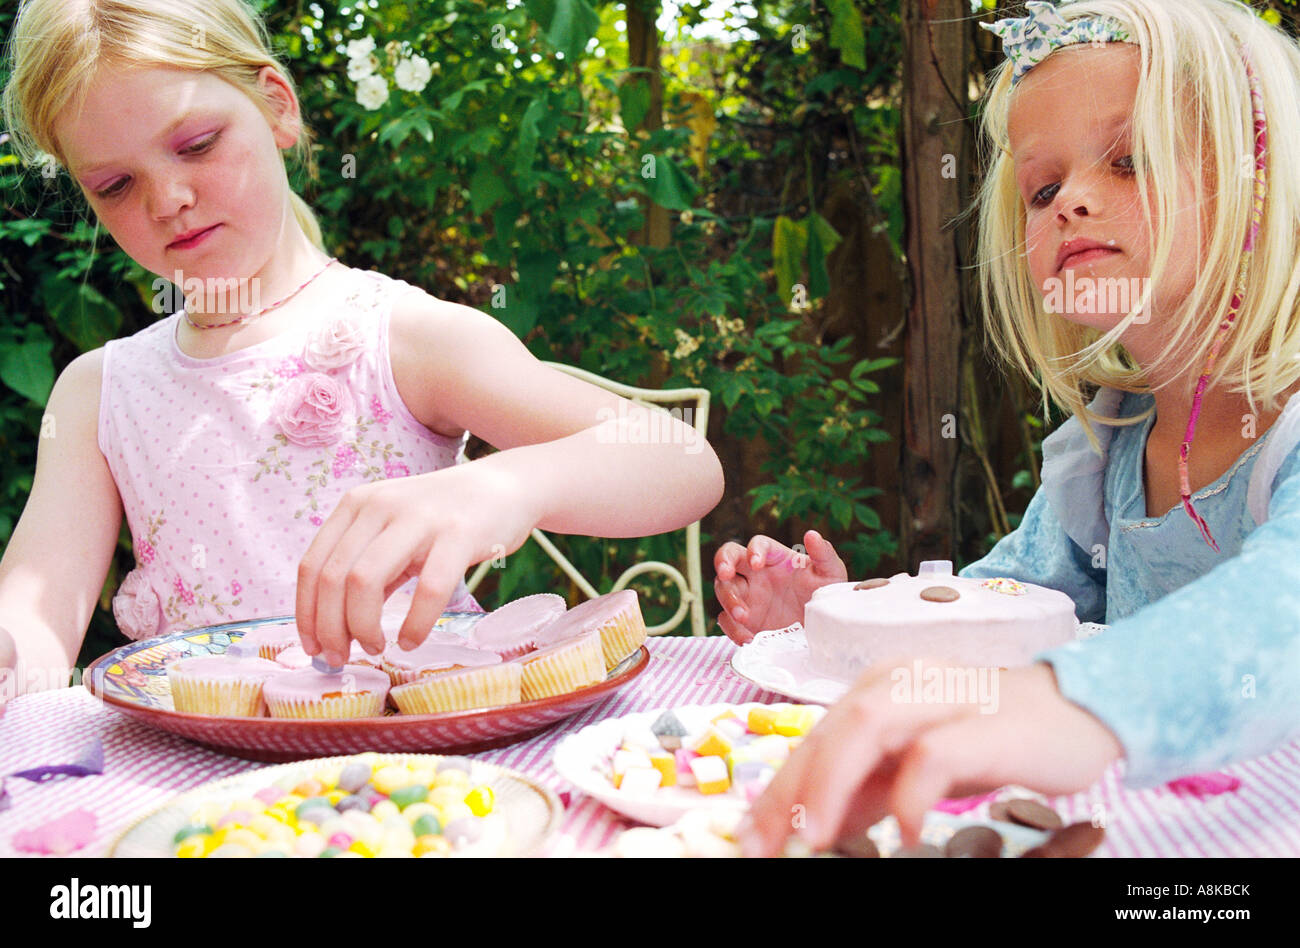 Children decorating cakes Stock Photo